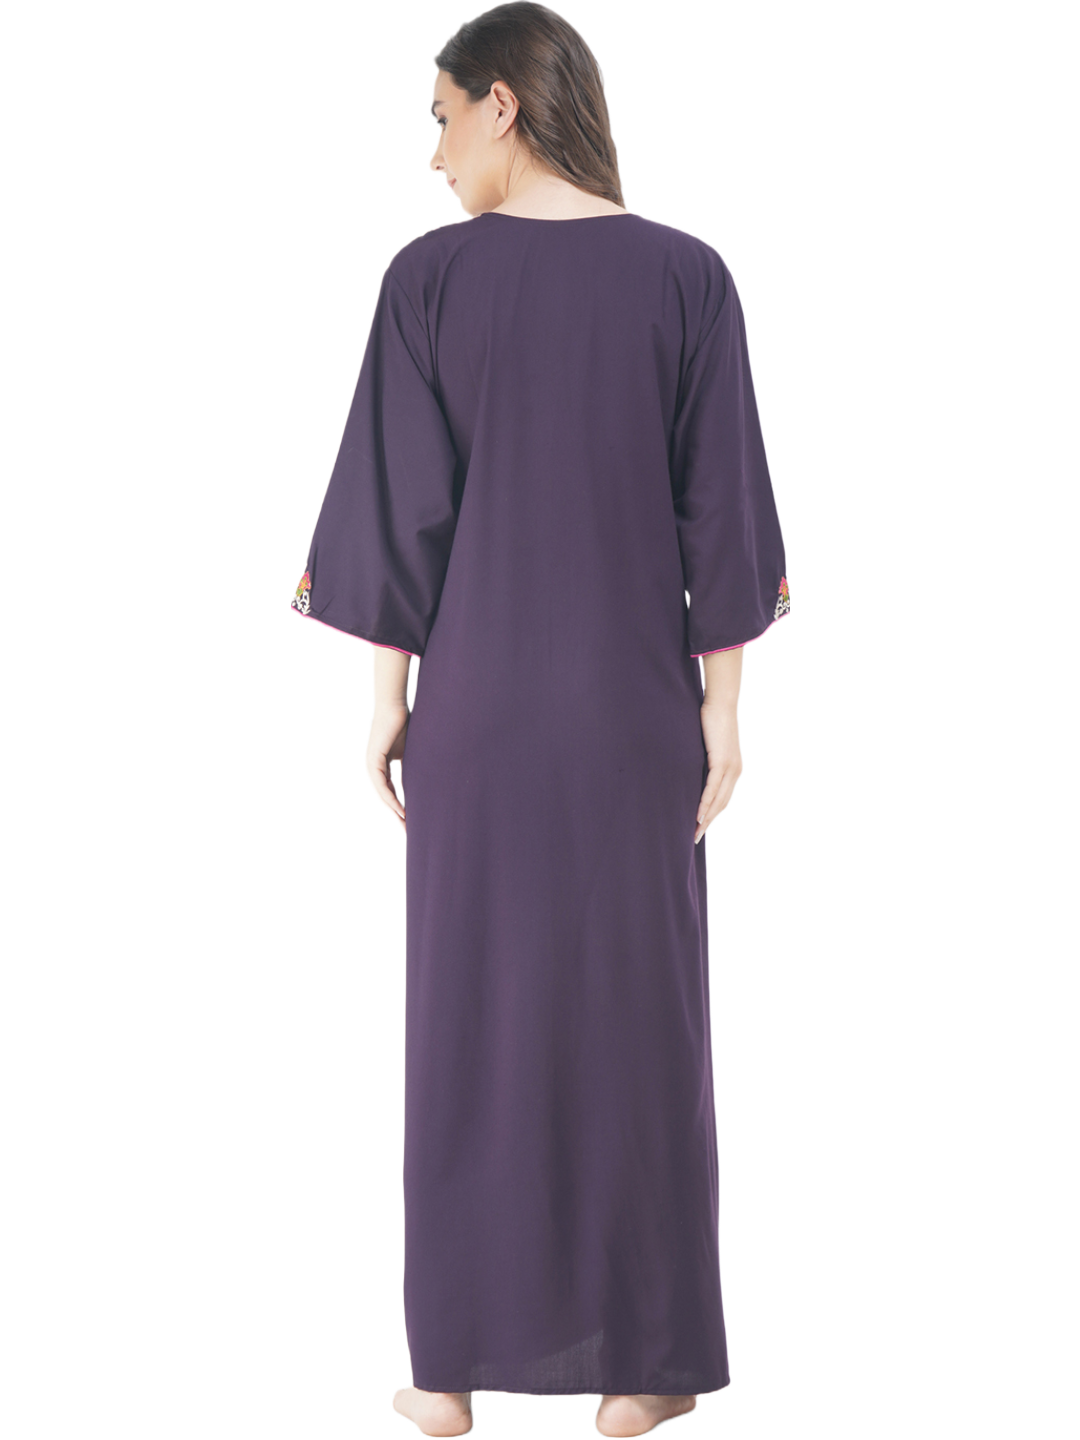 Womens Night Gown Nightie 100% Soft Cotton Plus Size Long Sleeve PJ Nightie  8-16 | eBay